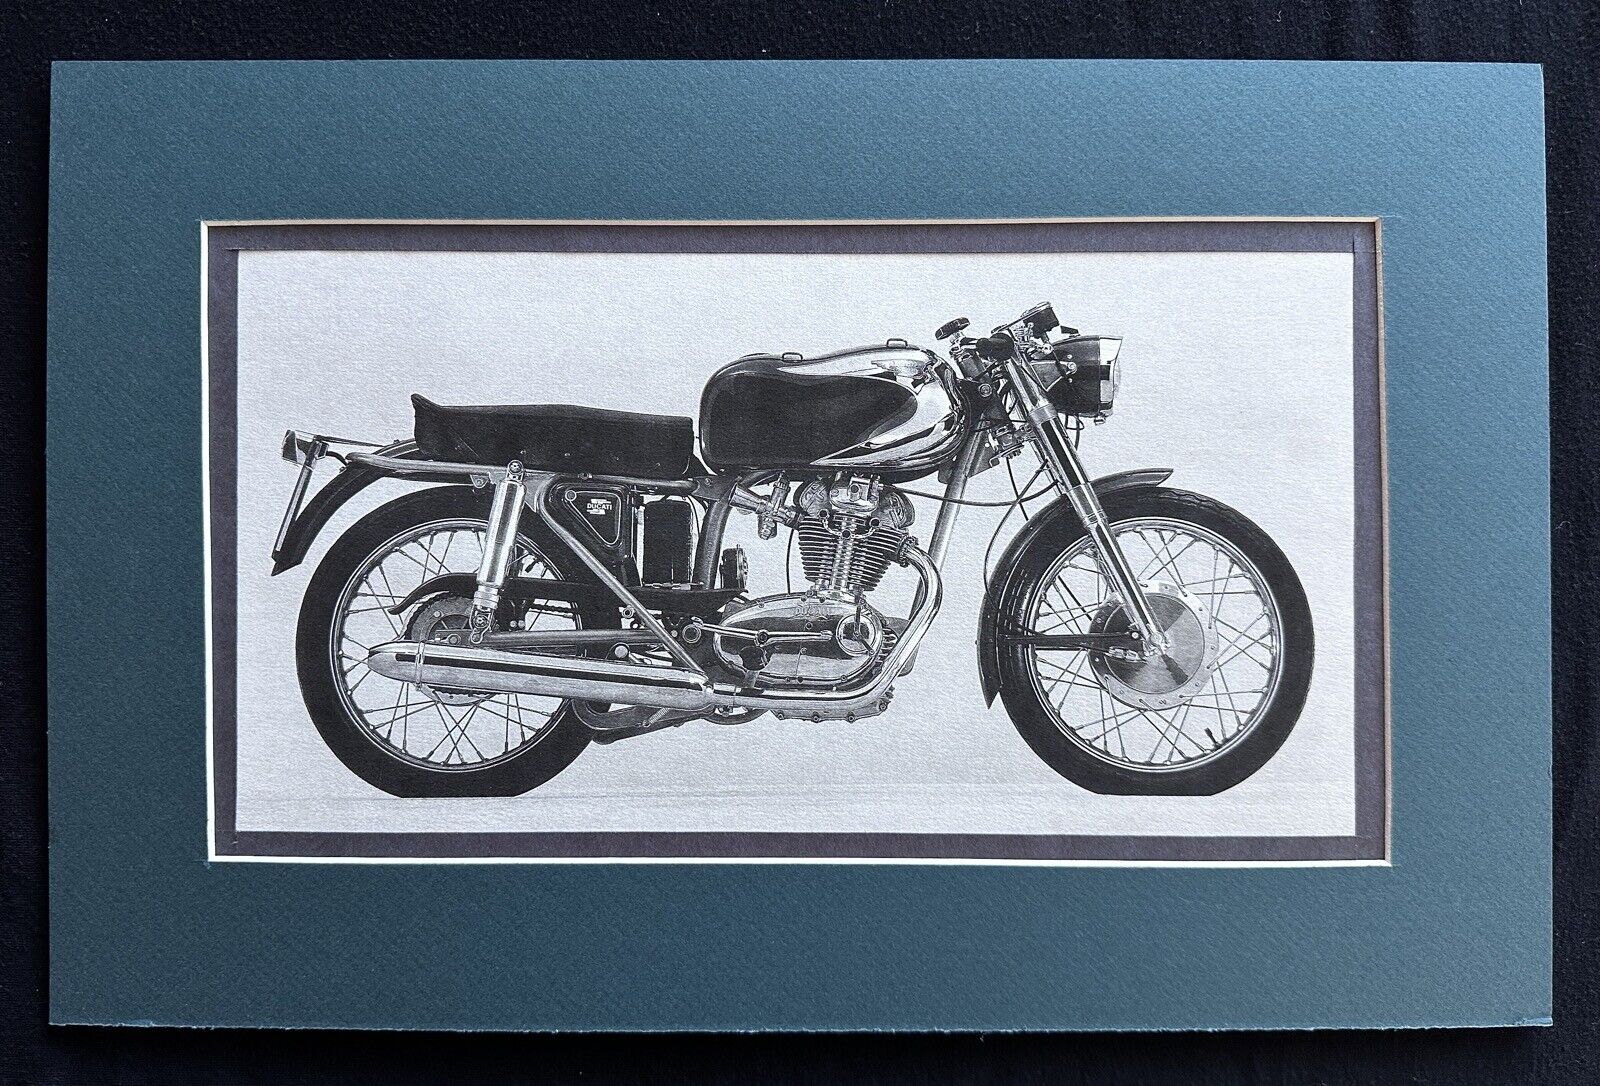  1962 Ducati Elite 204cc Motorcycle Matted B+W Photograph Print